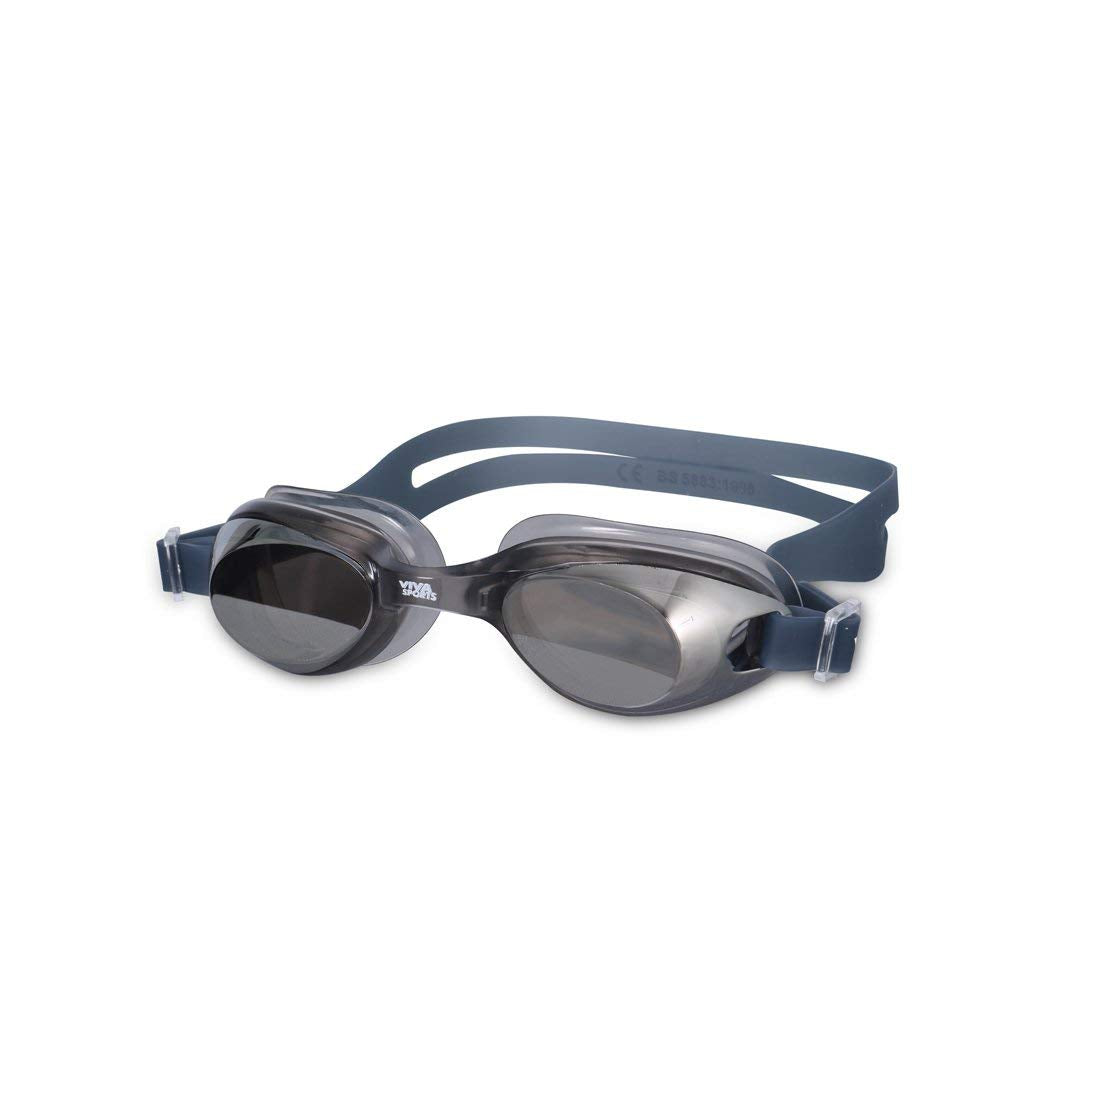 Sports High Performance Swimming Goggle, Black/Silver - Best Price online Prokicksports.com